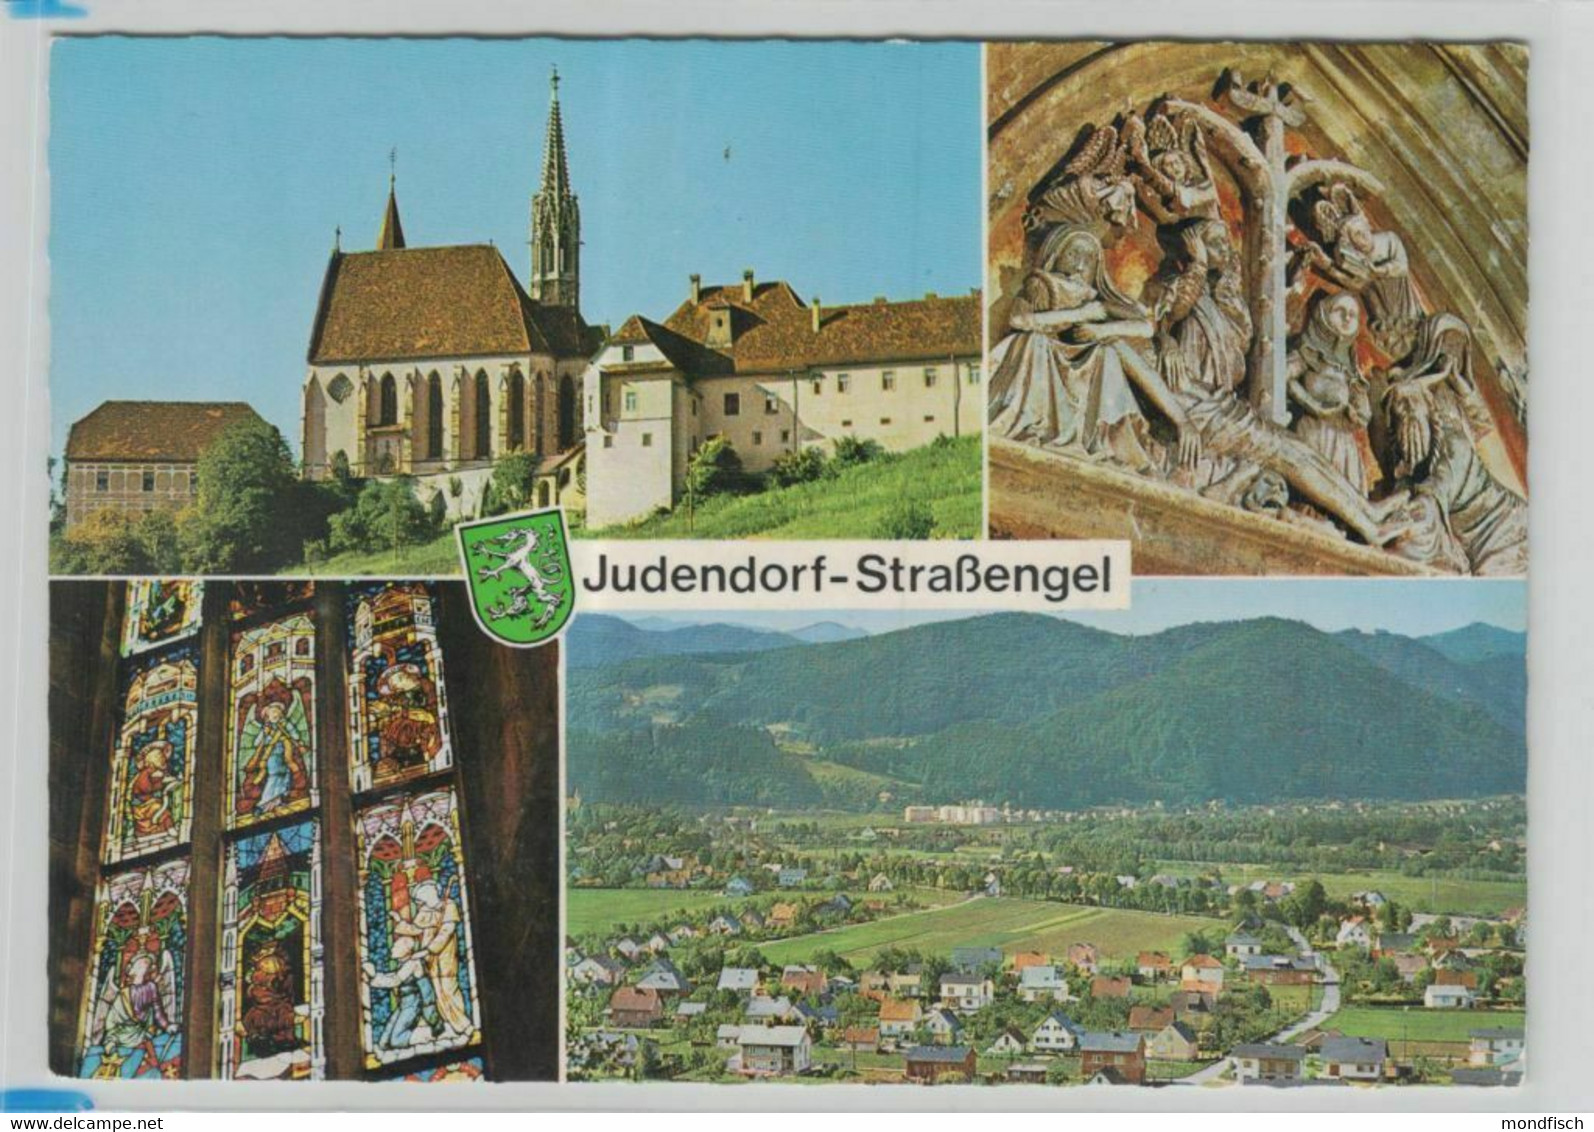 Judendorf-Straßengel - Judendorf-Strassengel